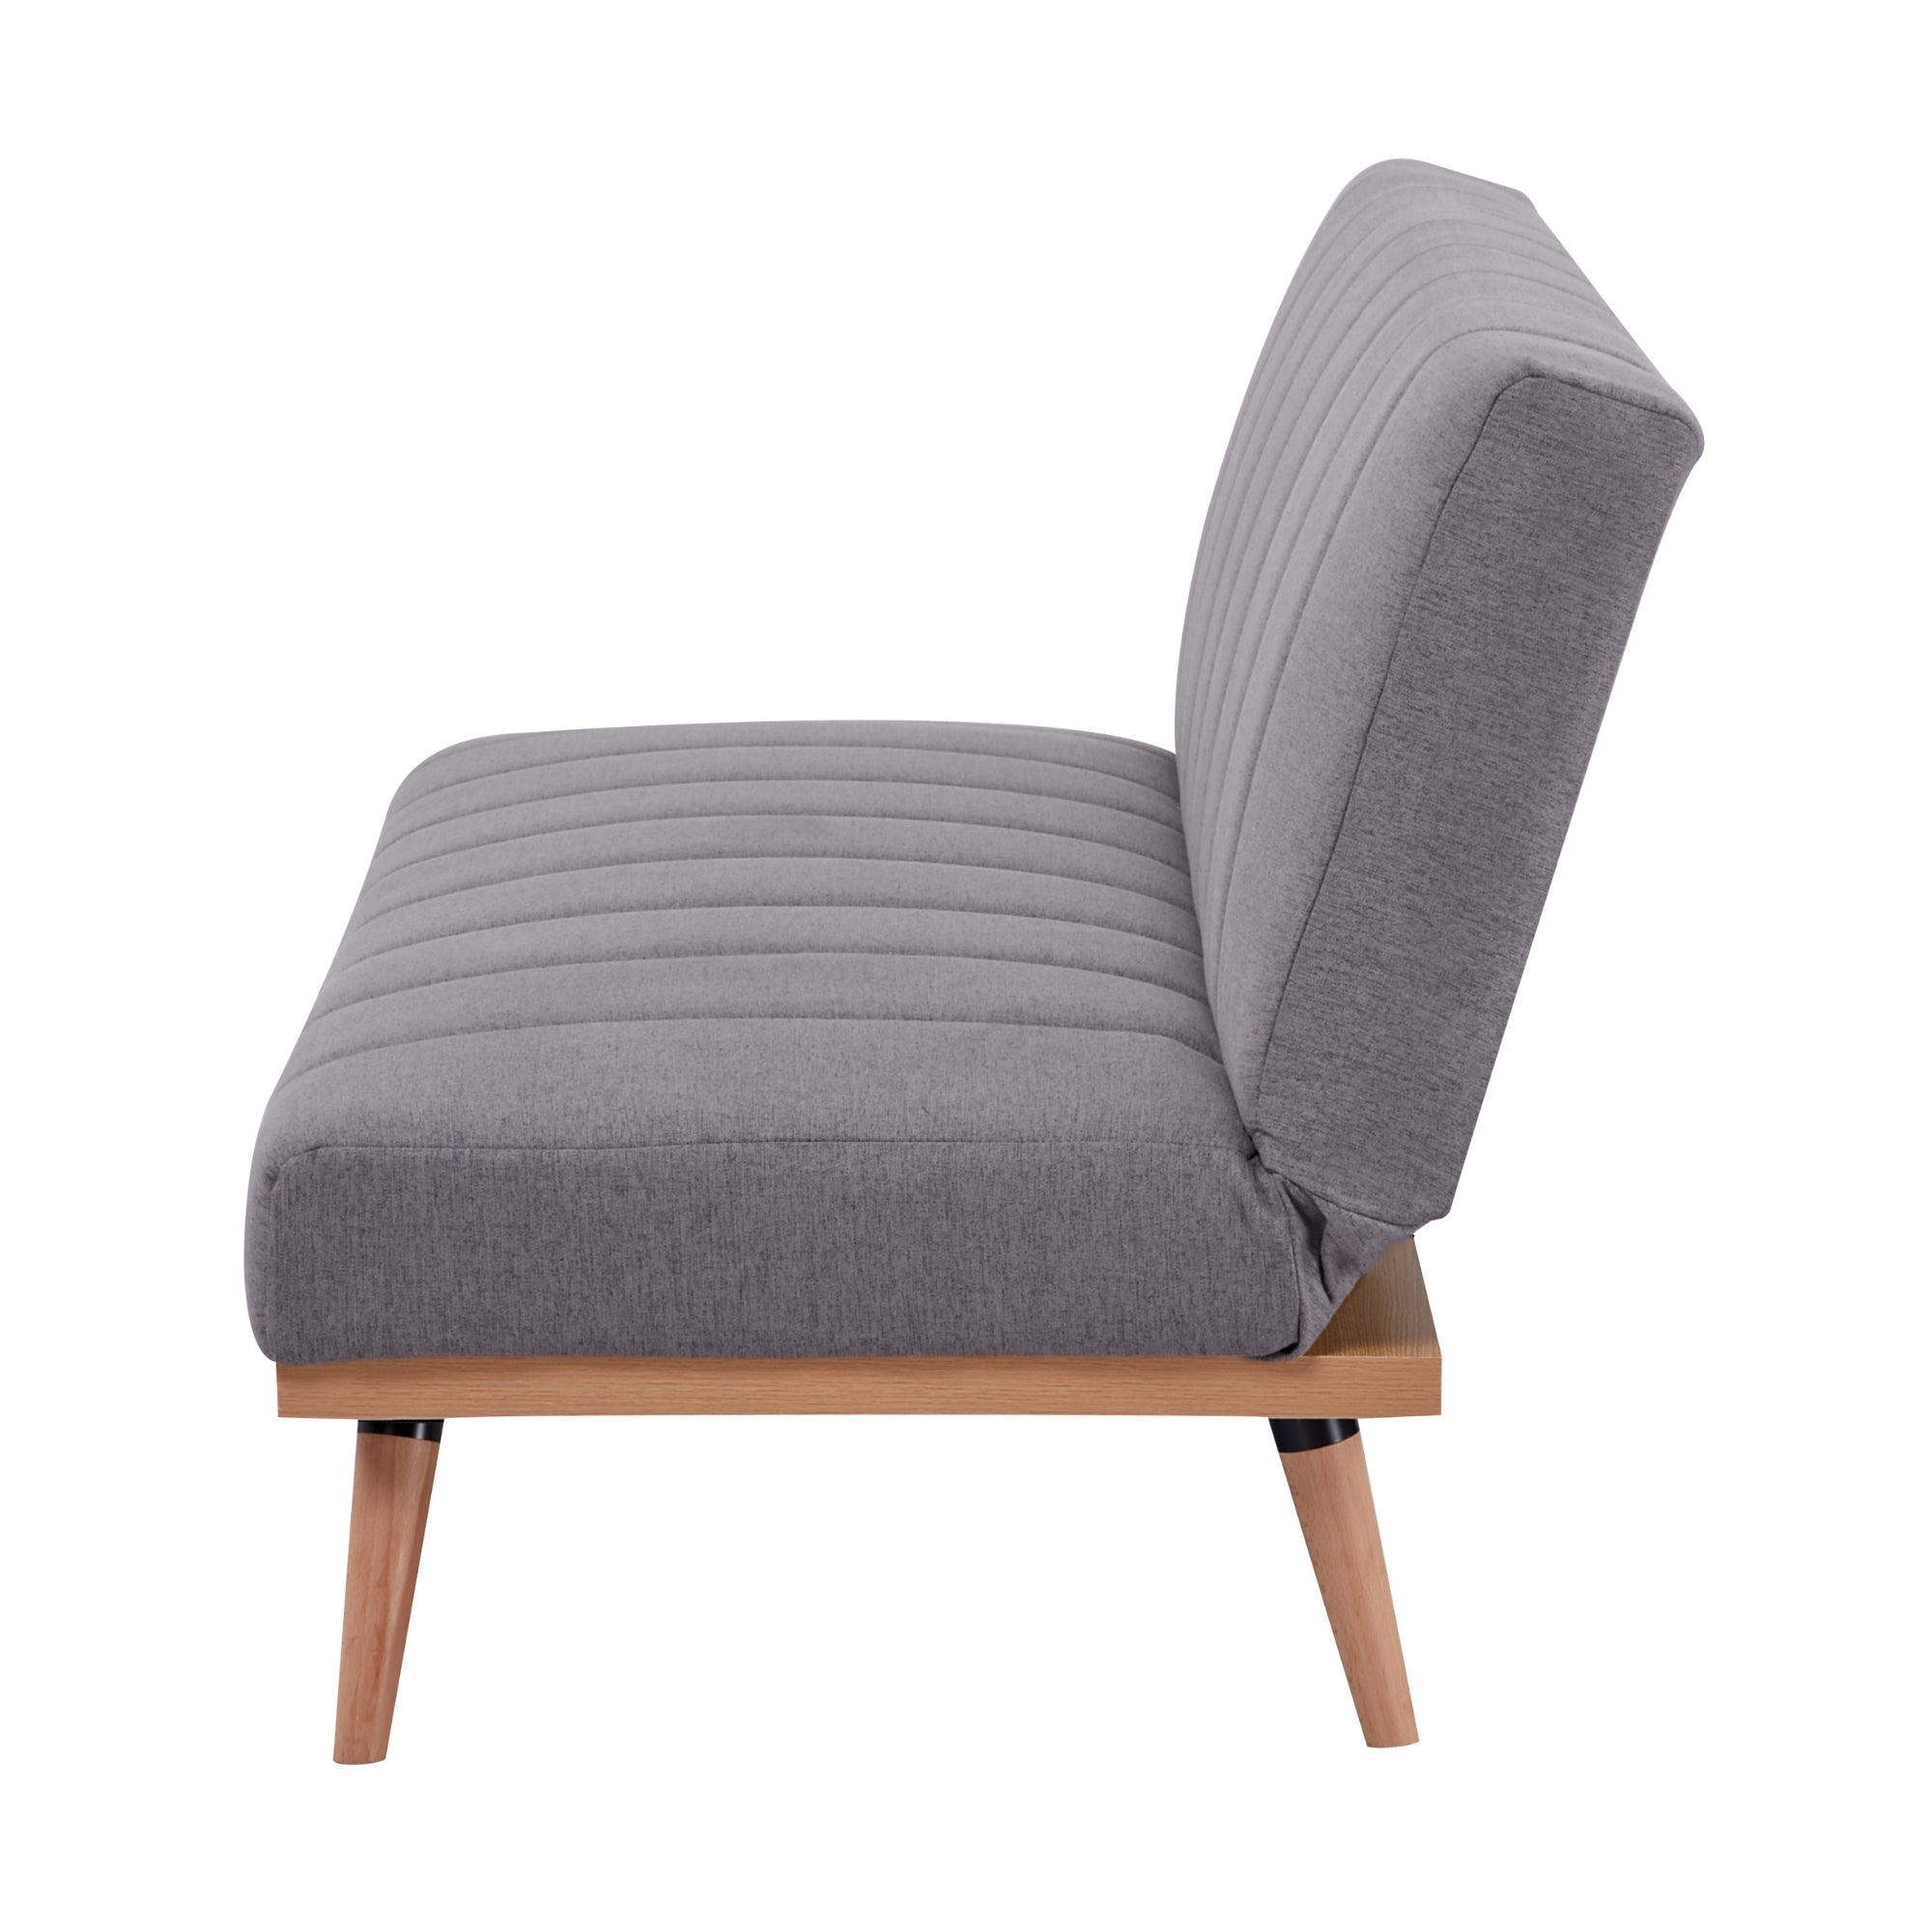 Slimline Graphite 3-Seater Sofa Bed, Foam Support, Scandinavian Style - Monroe